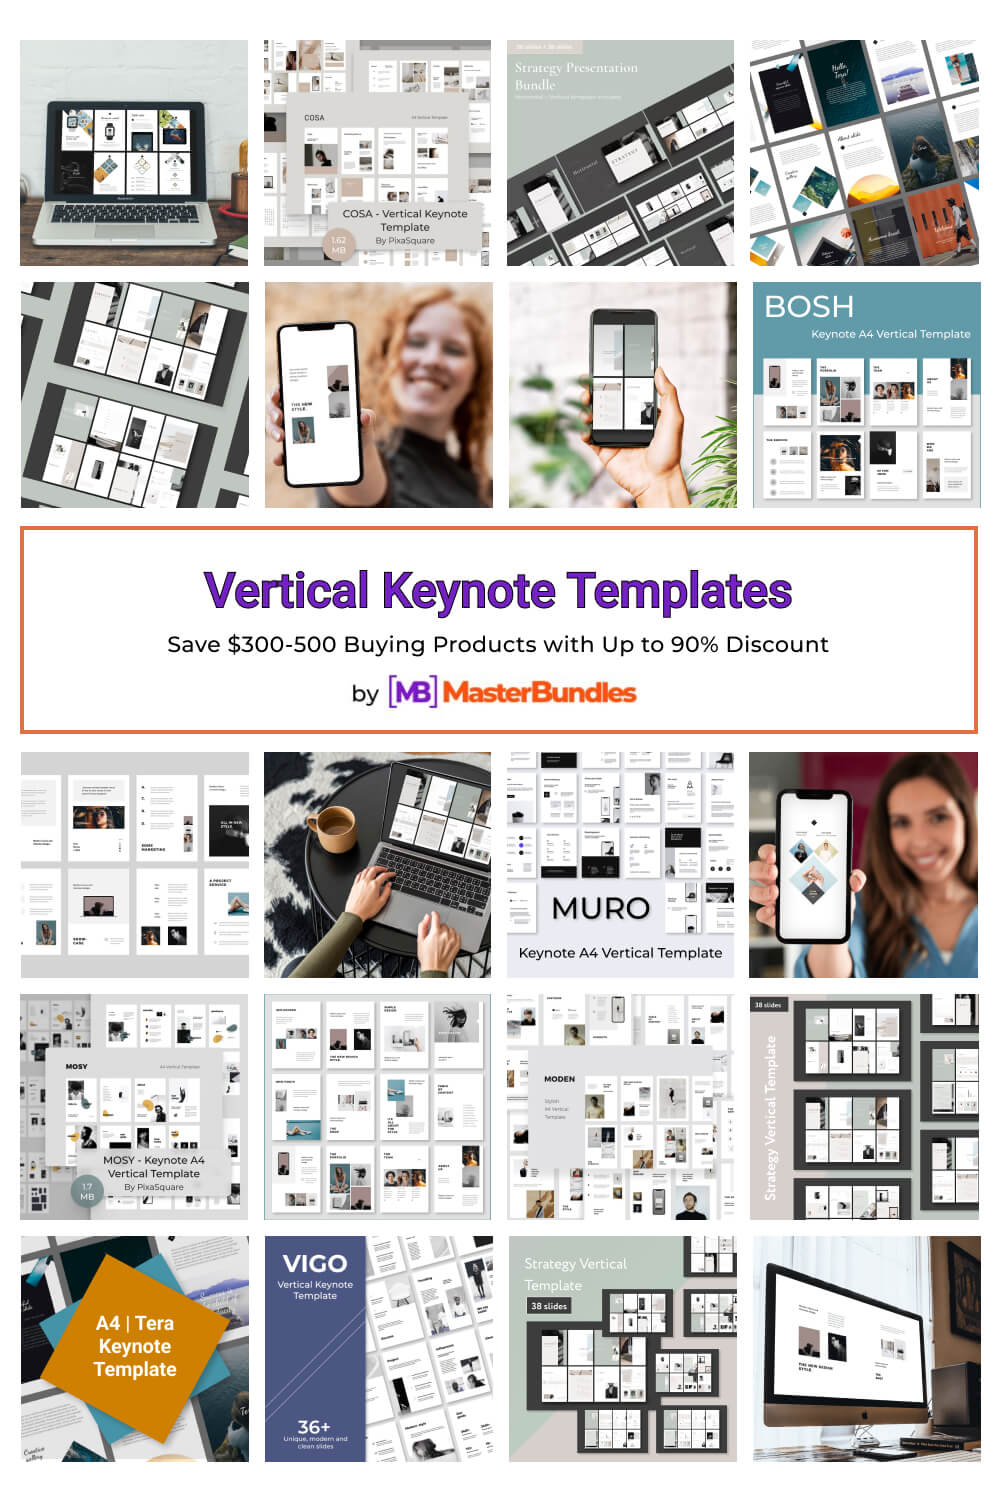 vertical keynote templates pinterest image.